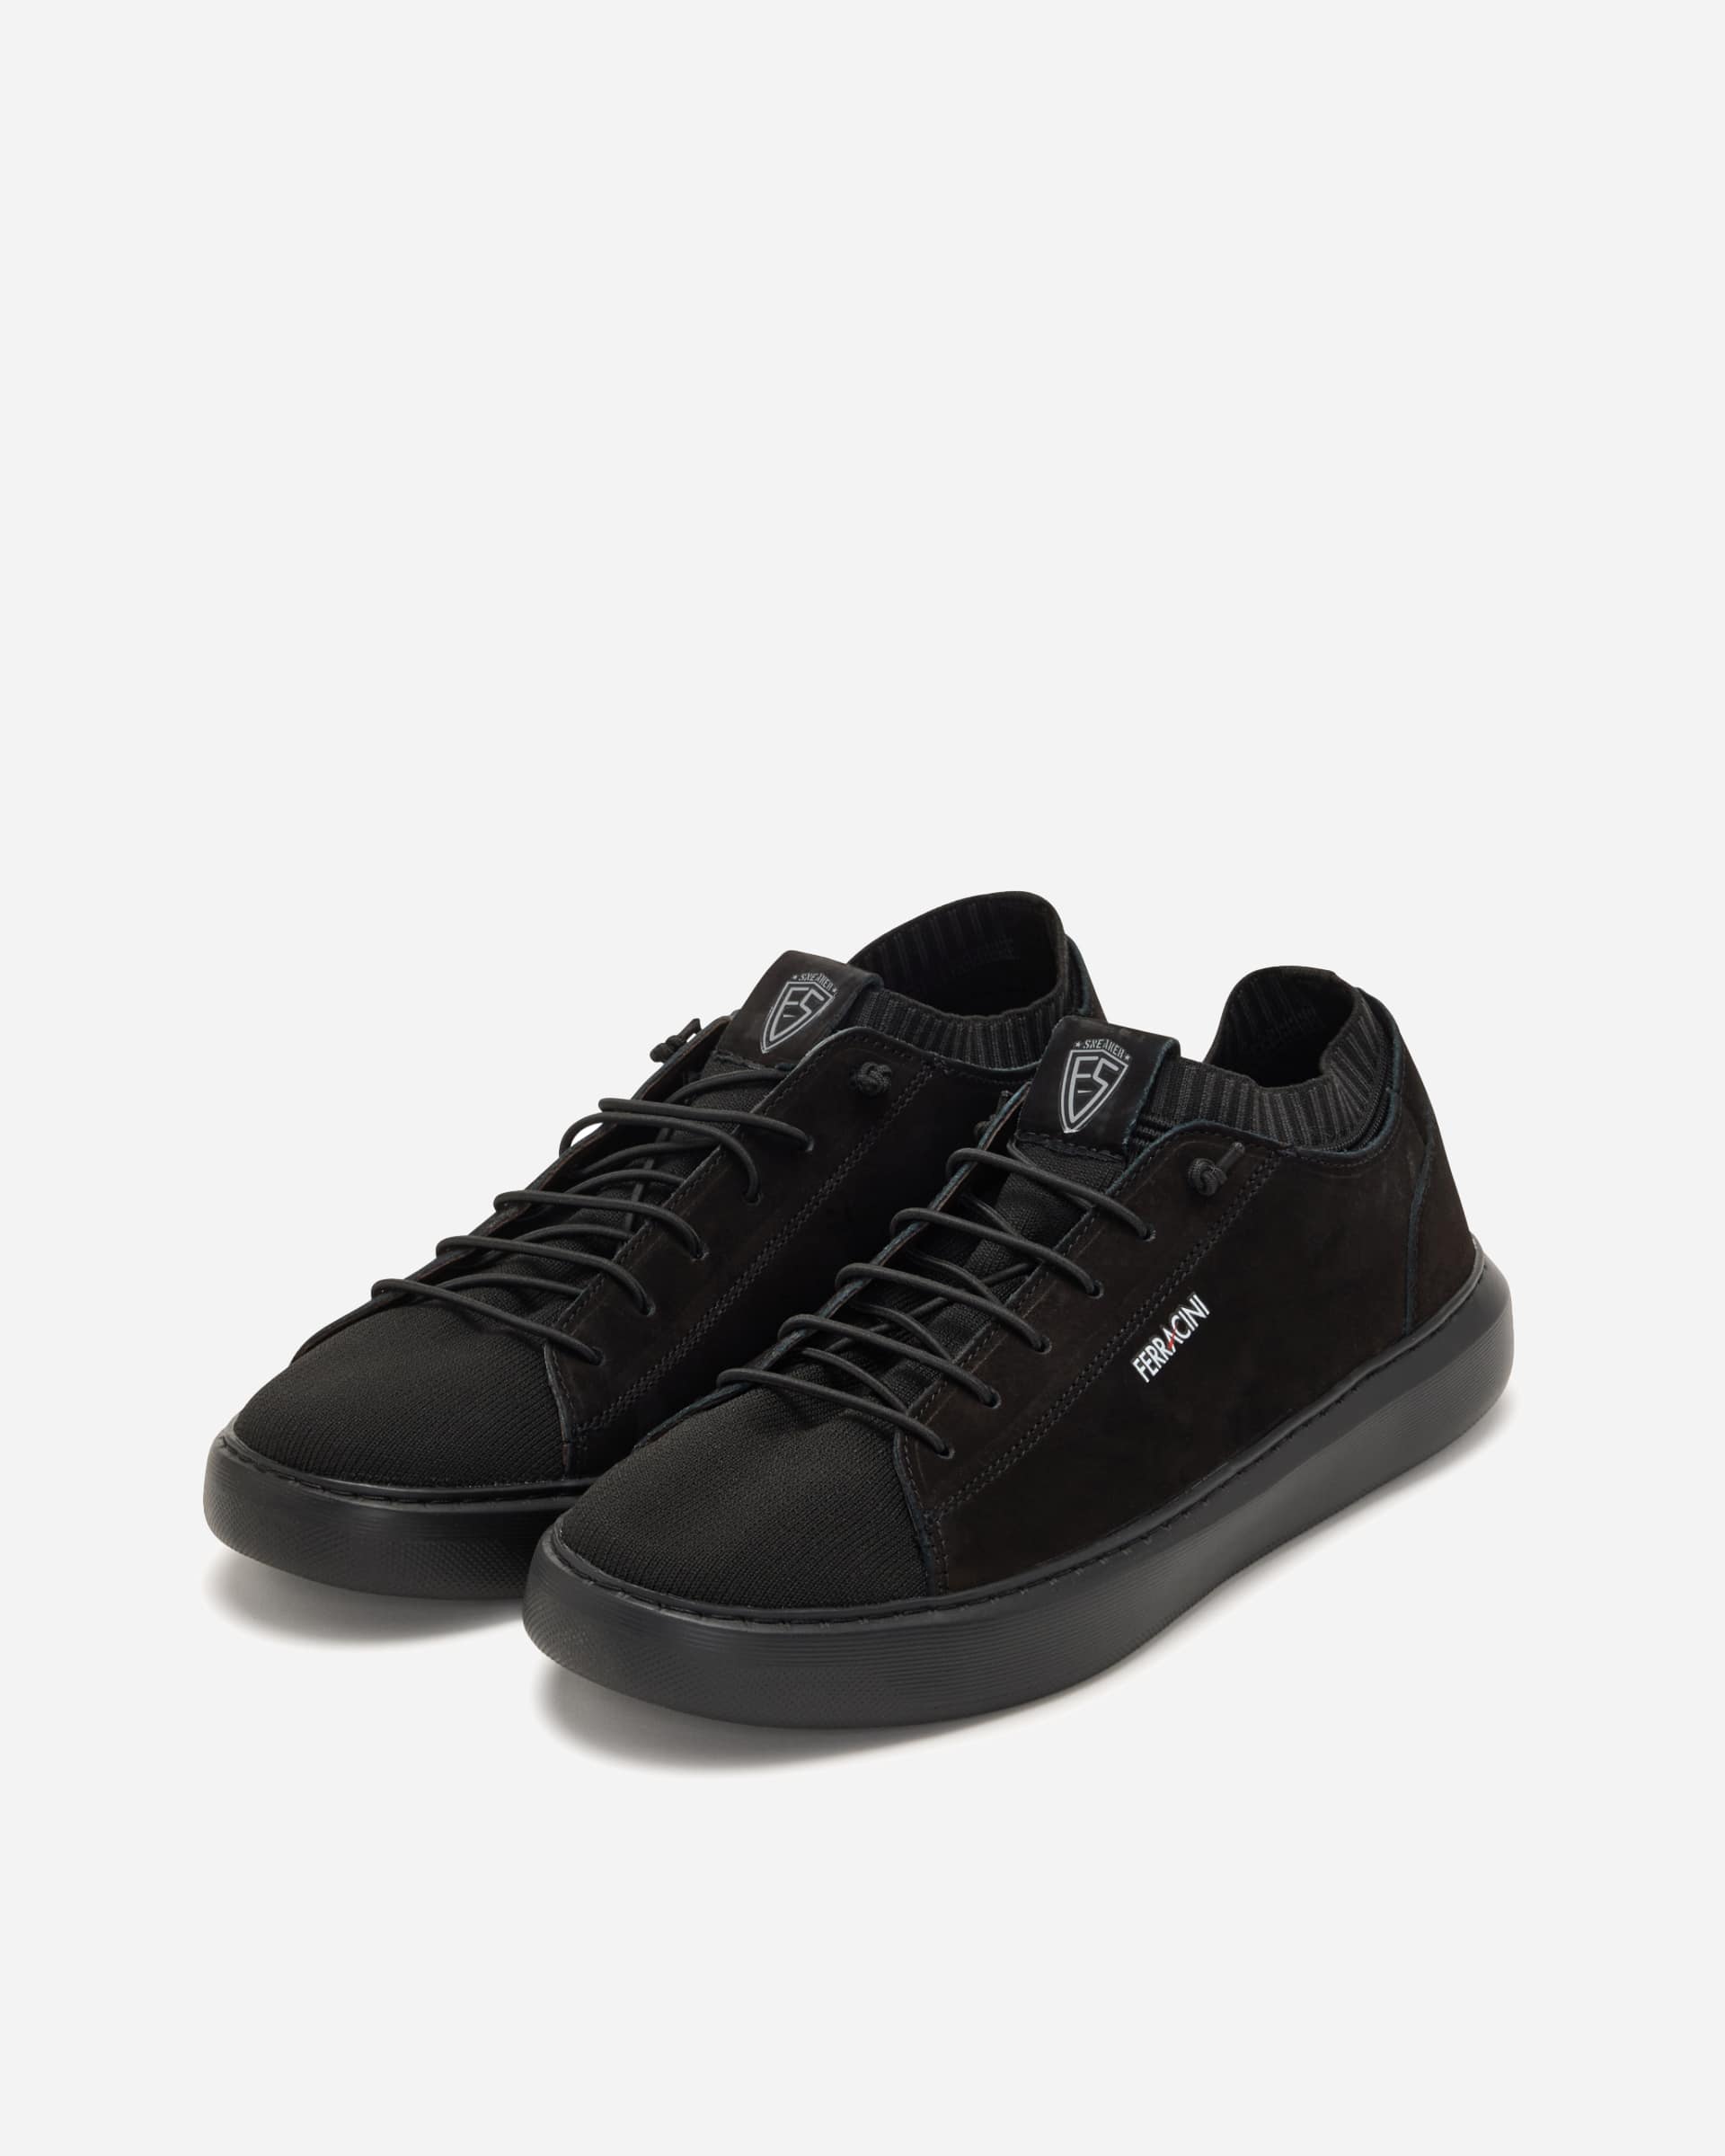 Xavion Black Sneaker - Men's Shoes at Menzclub